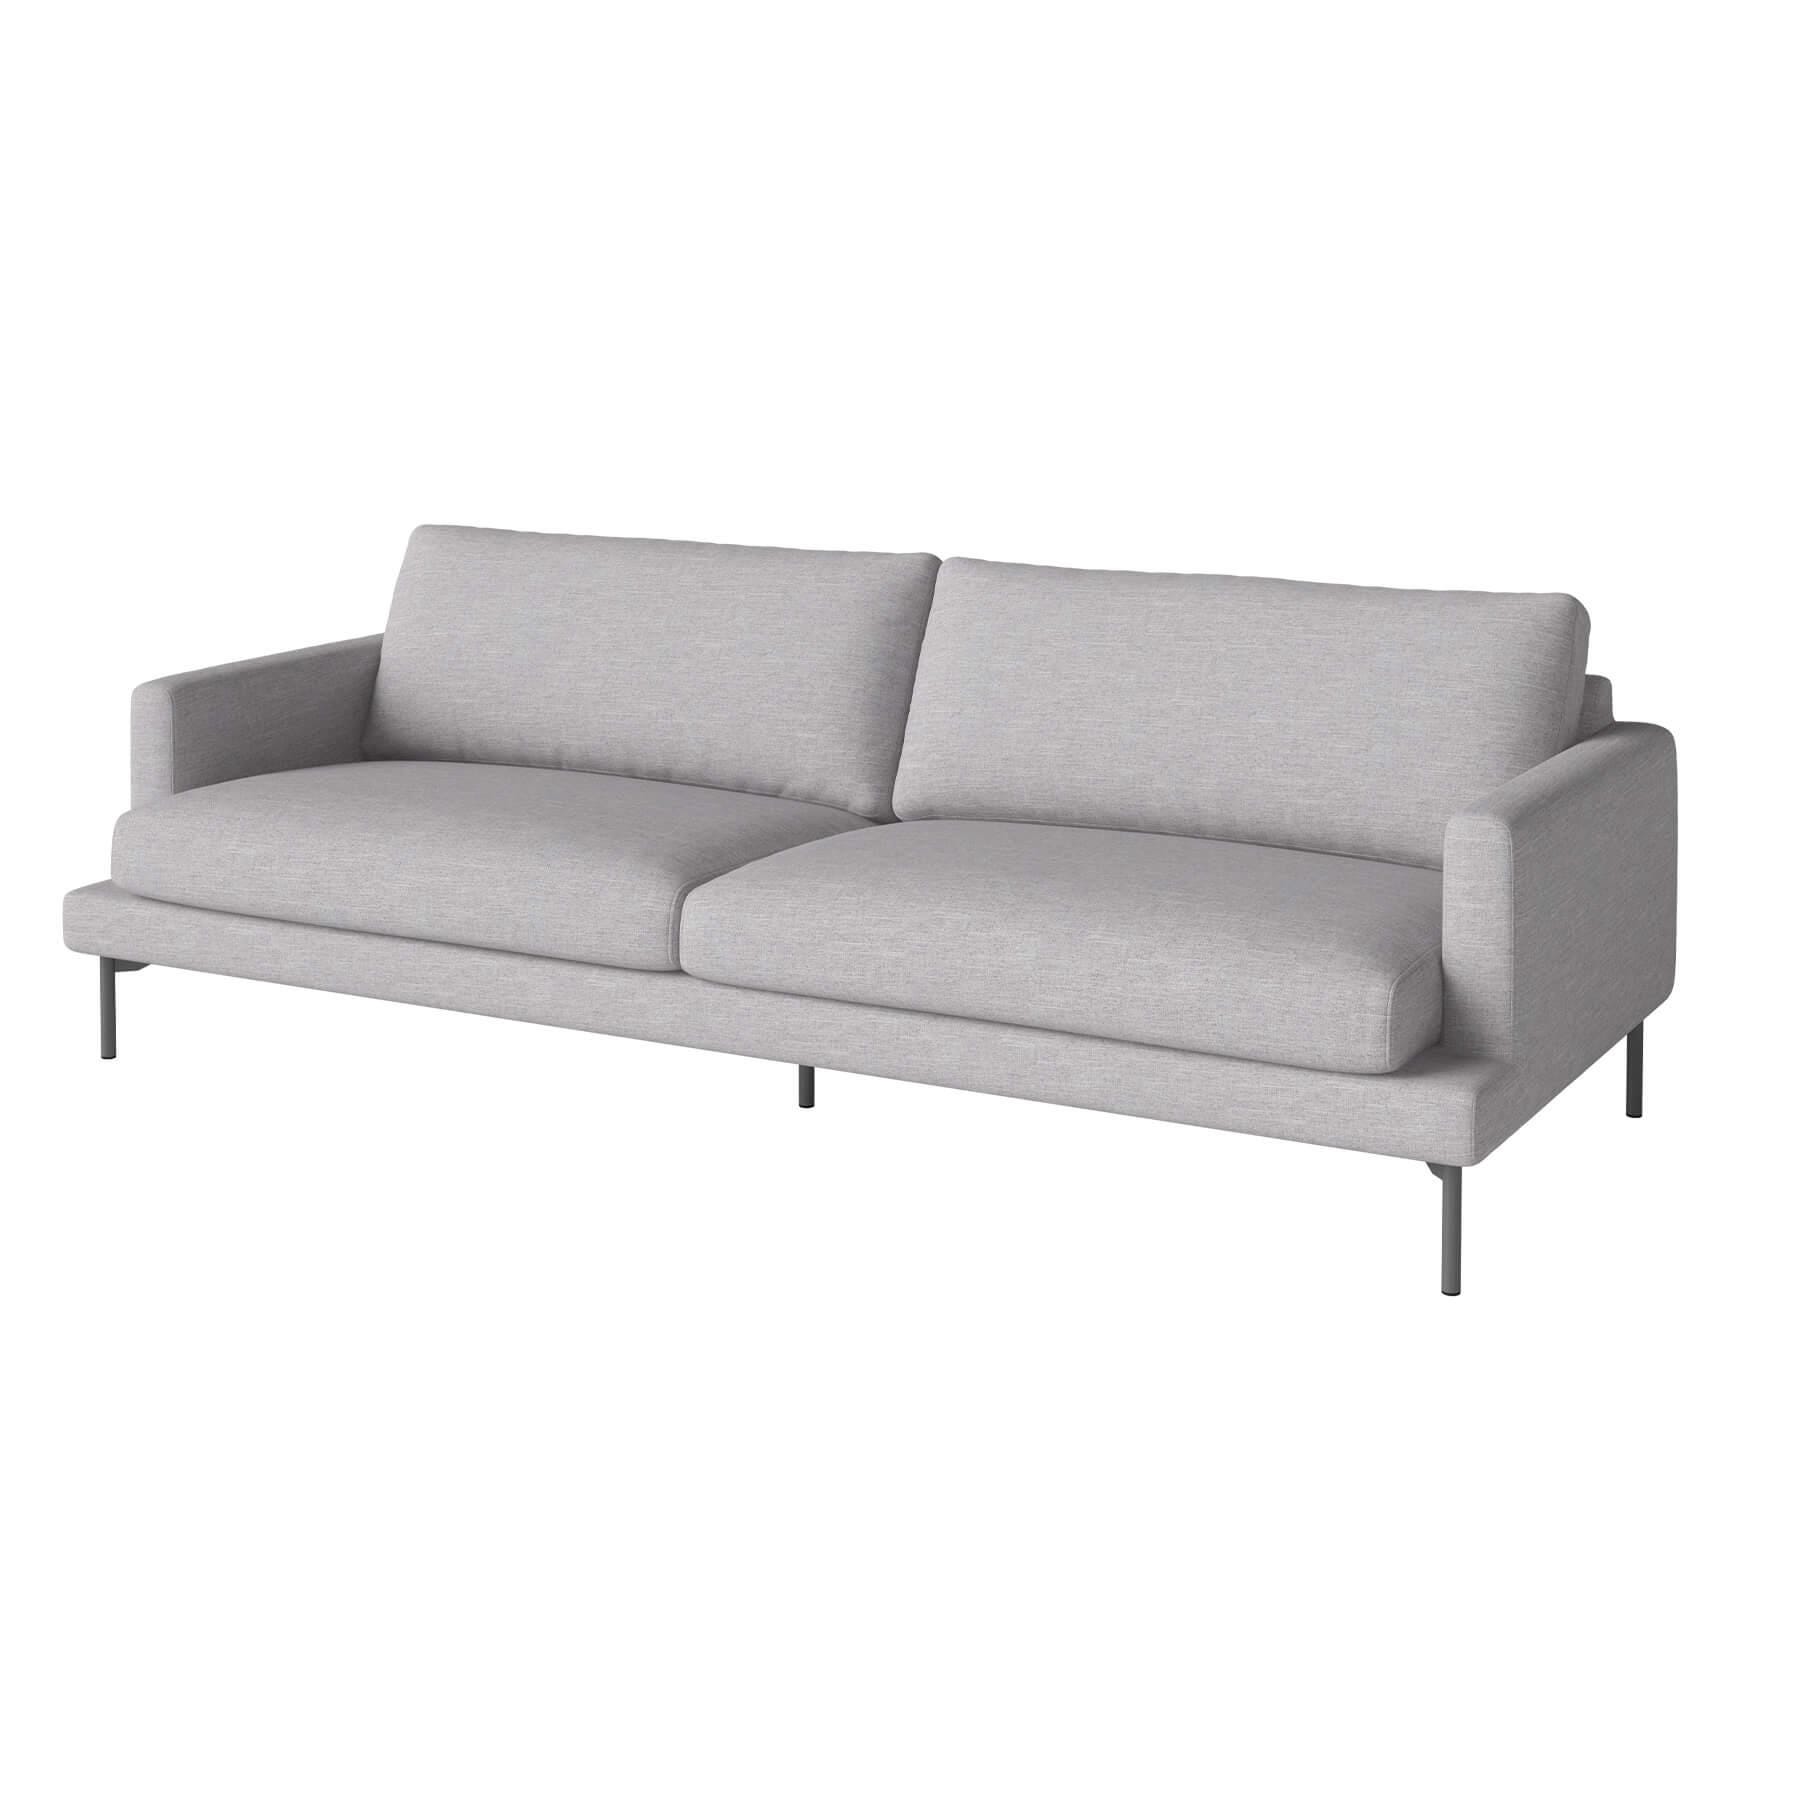 Bolia Veneda Sofa 3 Seater Sofa Grey Laquered Steel Baize Light Grey Designer Furniture From Holloways Of Ludlow